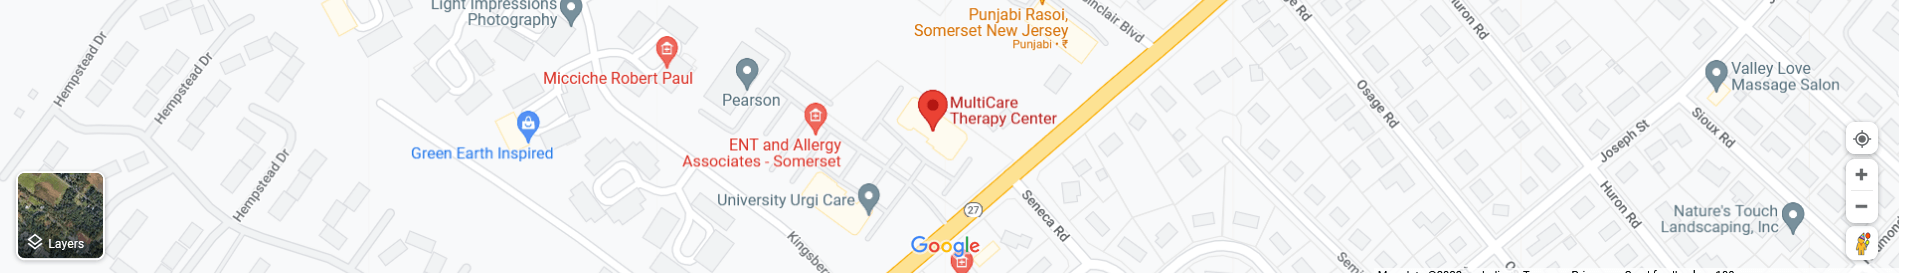 MultiCare Therapy Center